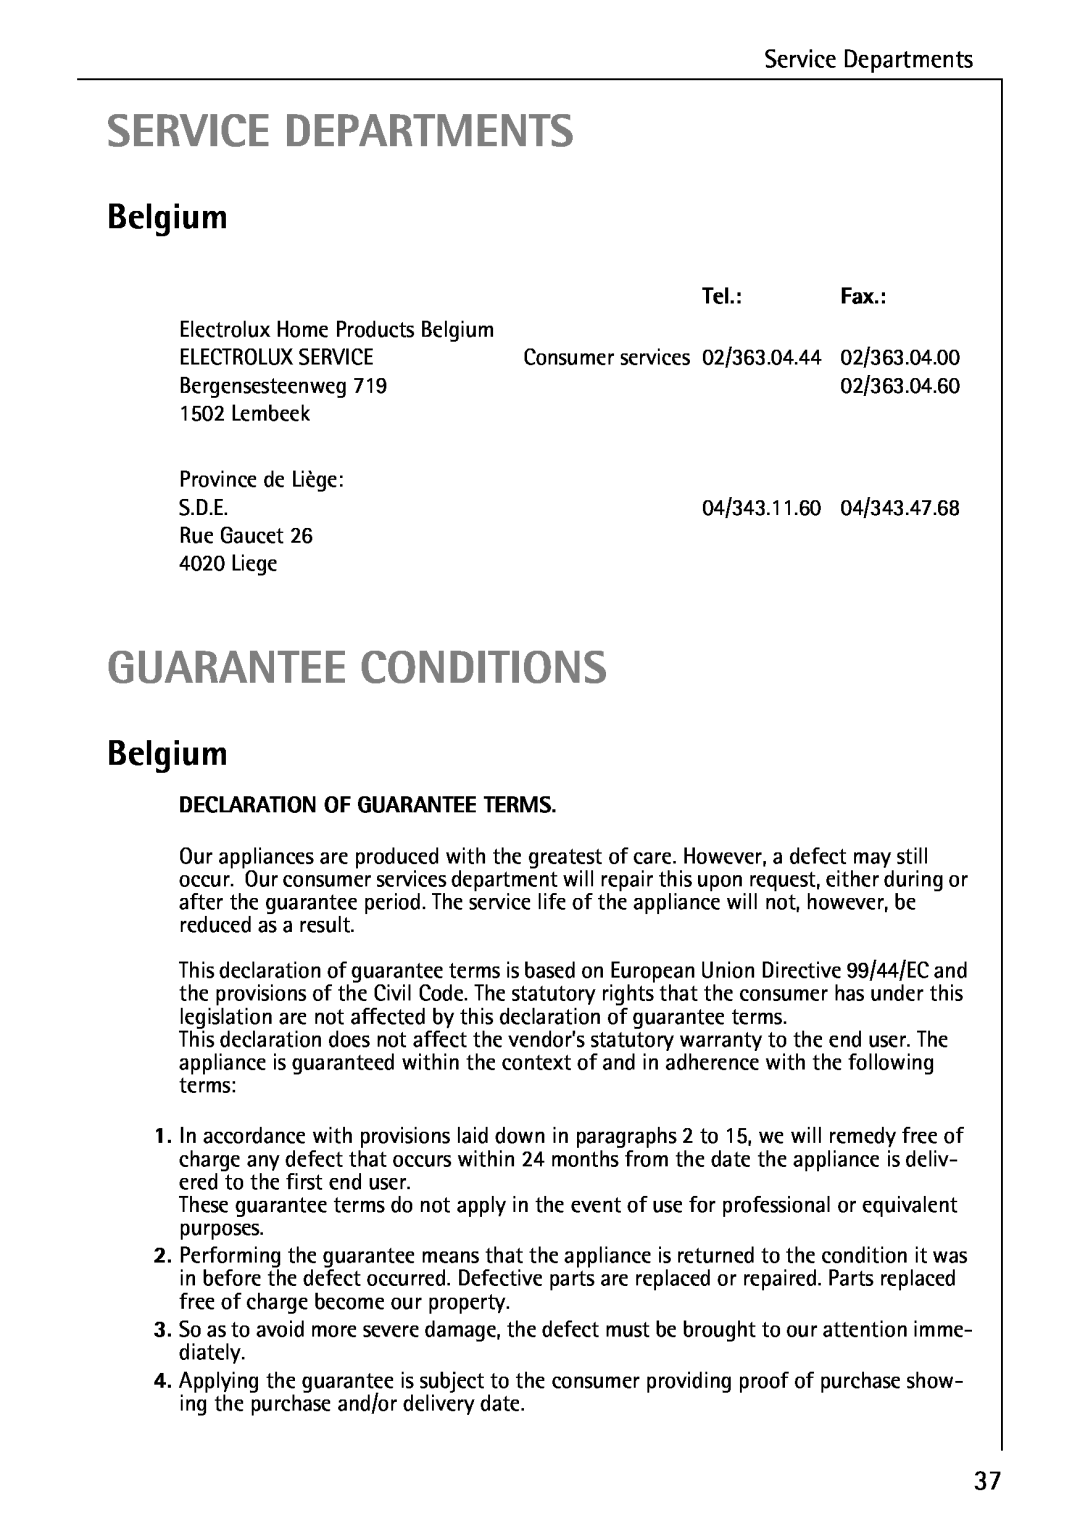 AEG 33060 I manual Service Departments, Guarantee Conditions, Belgium, Declaration Of Guarantee Terms 